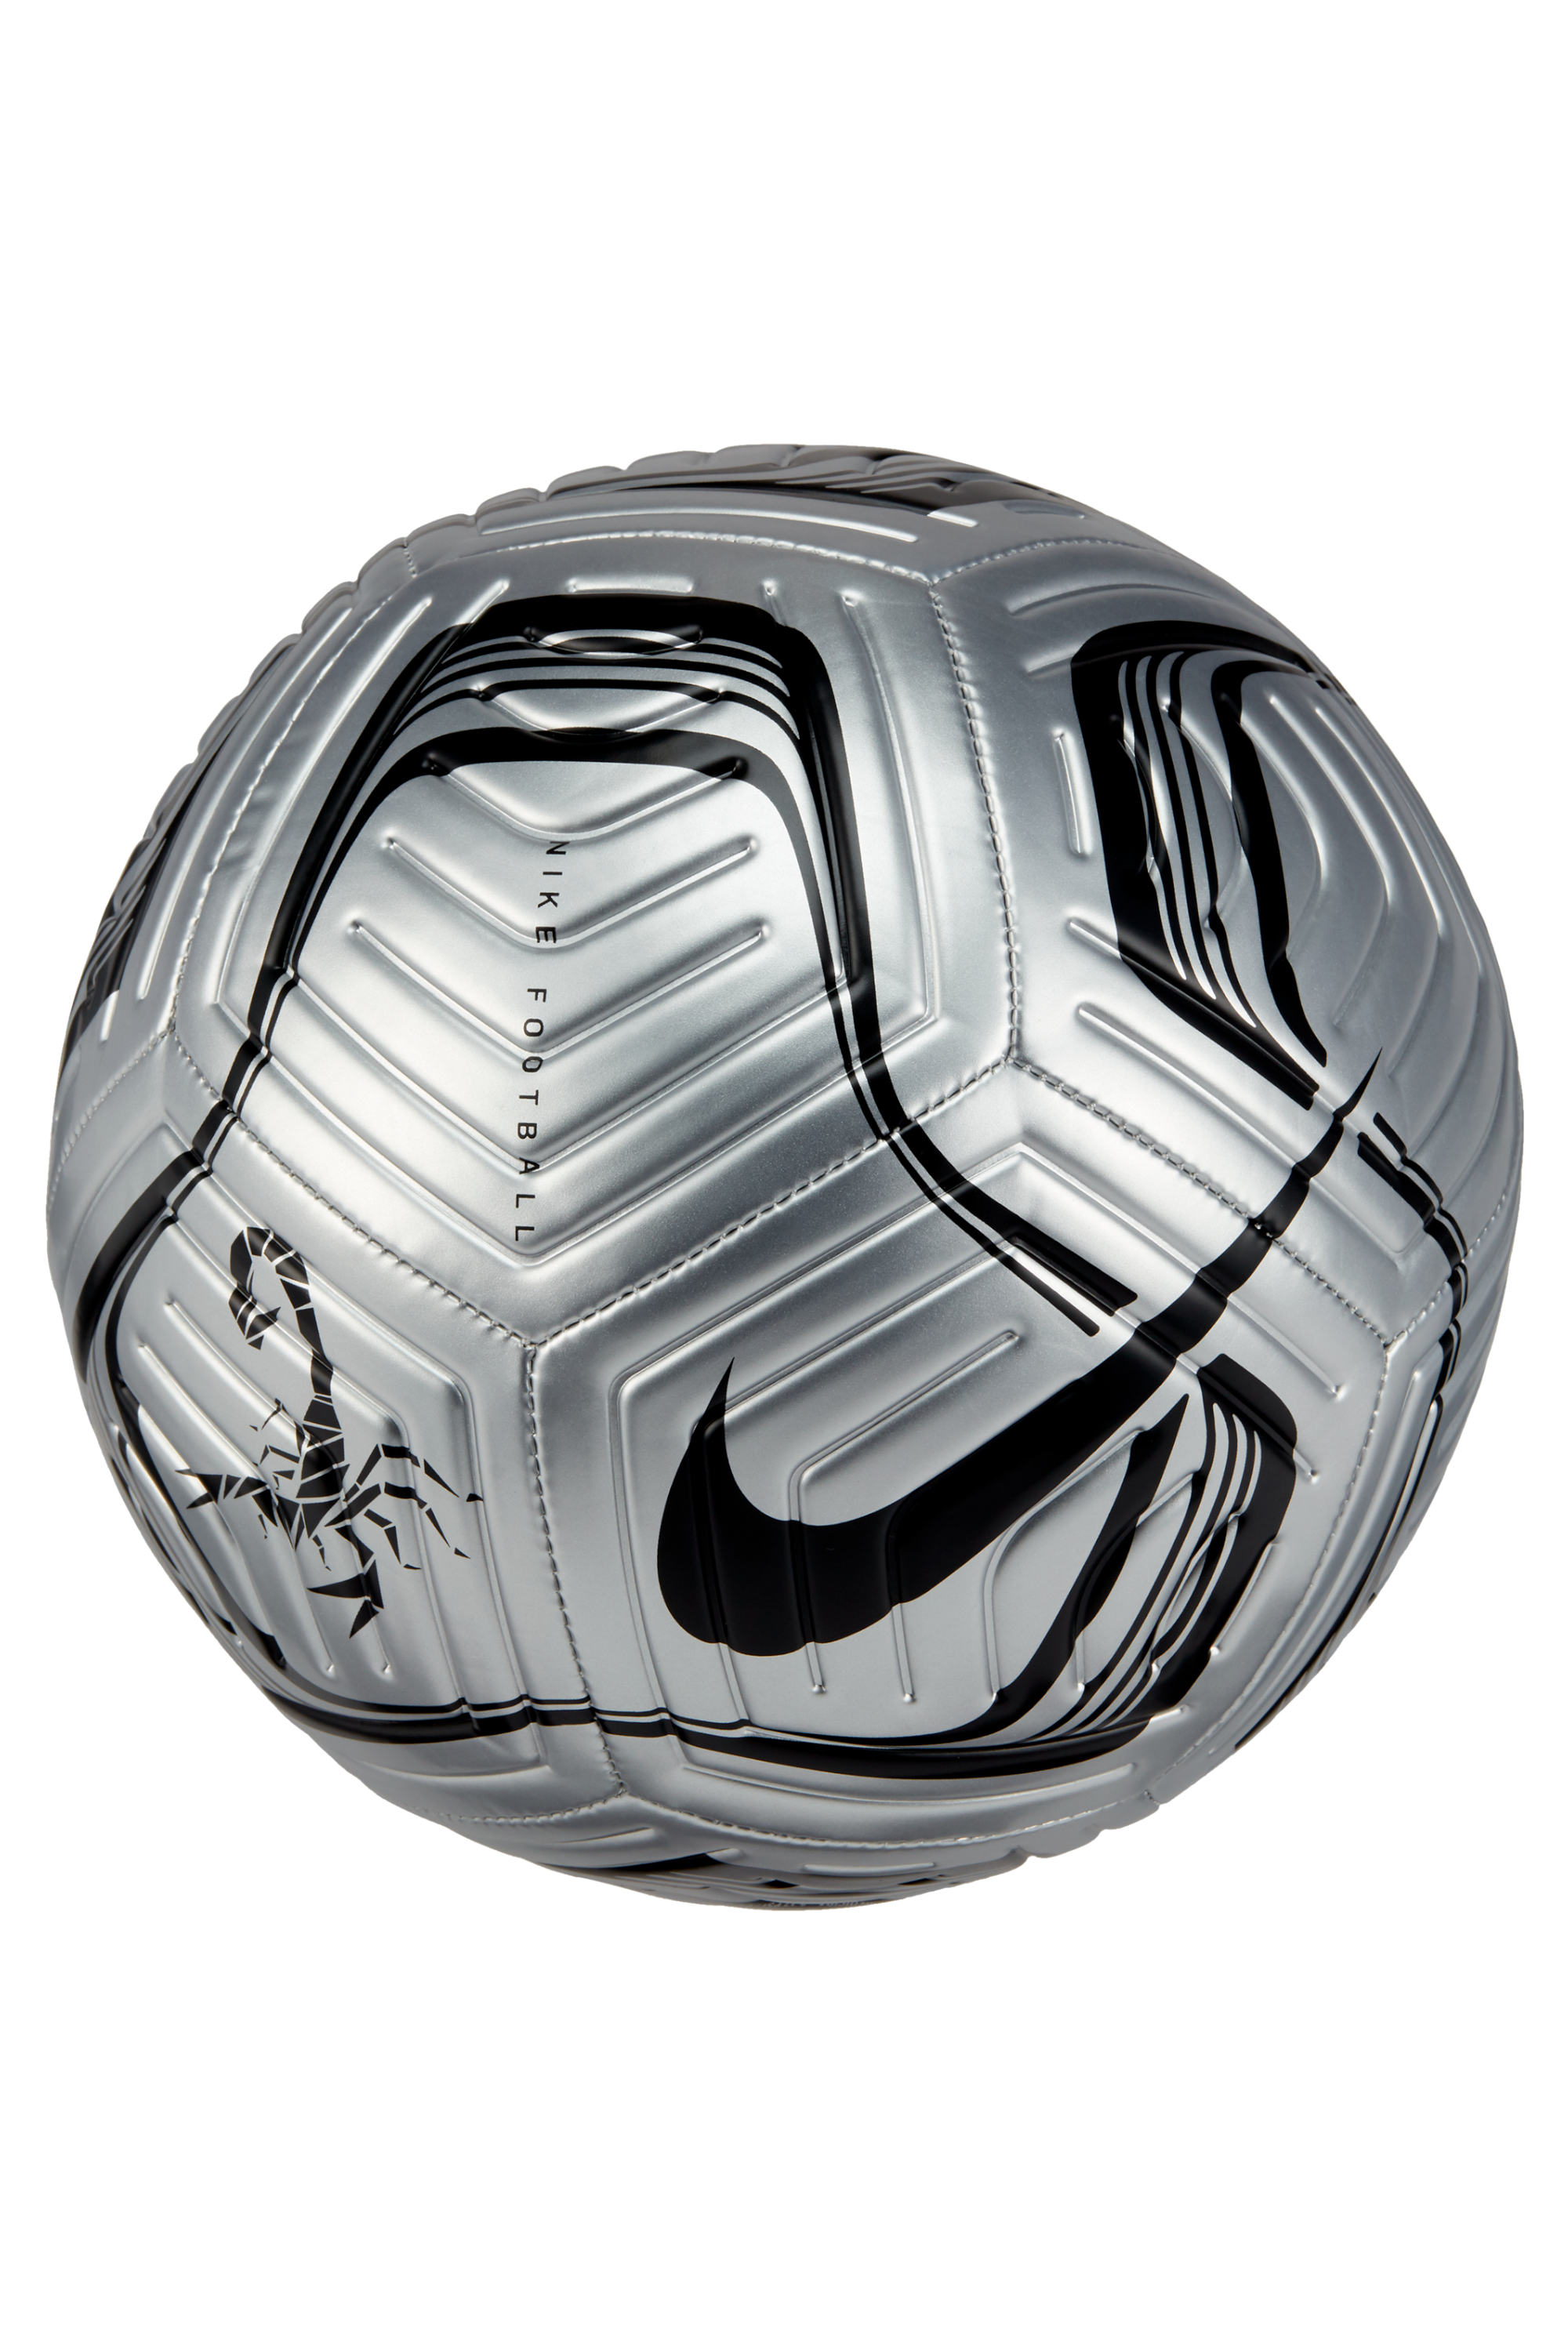 Ball Nike Strike Phantom Scorpion size 